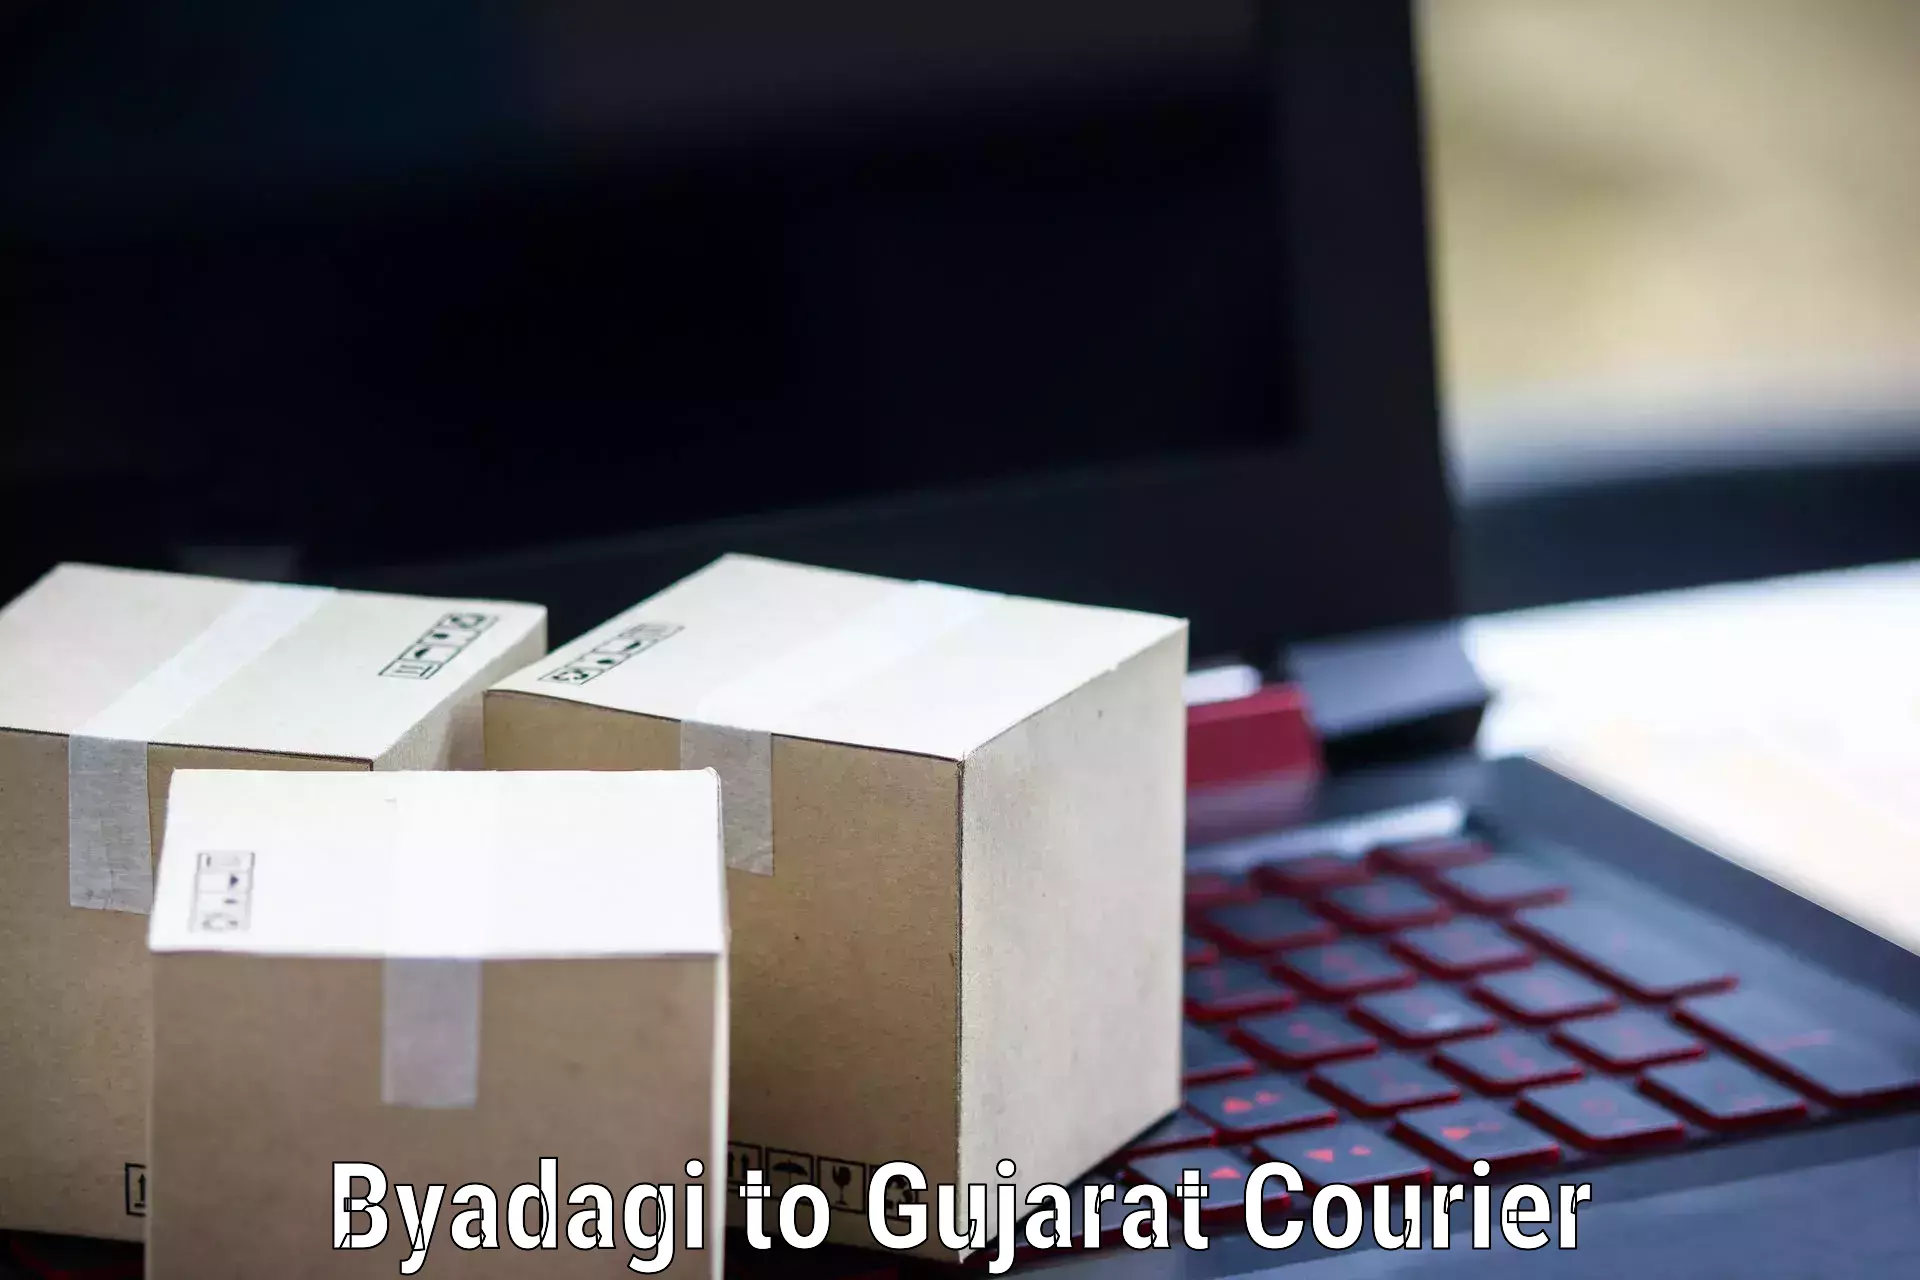 Global logistics network Byadagi to Jasdan